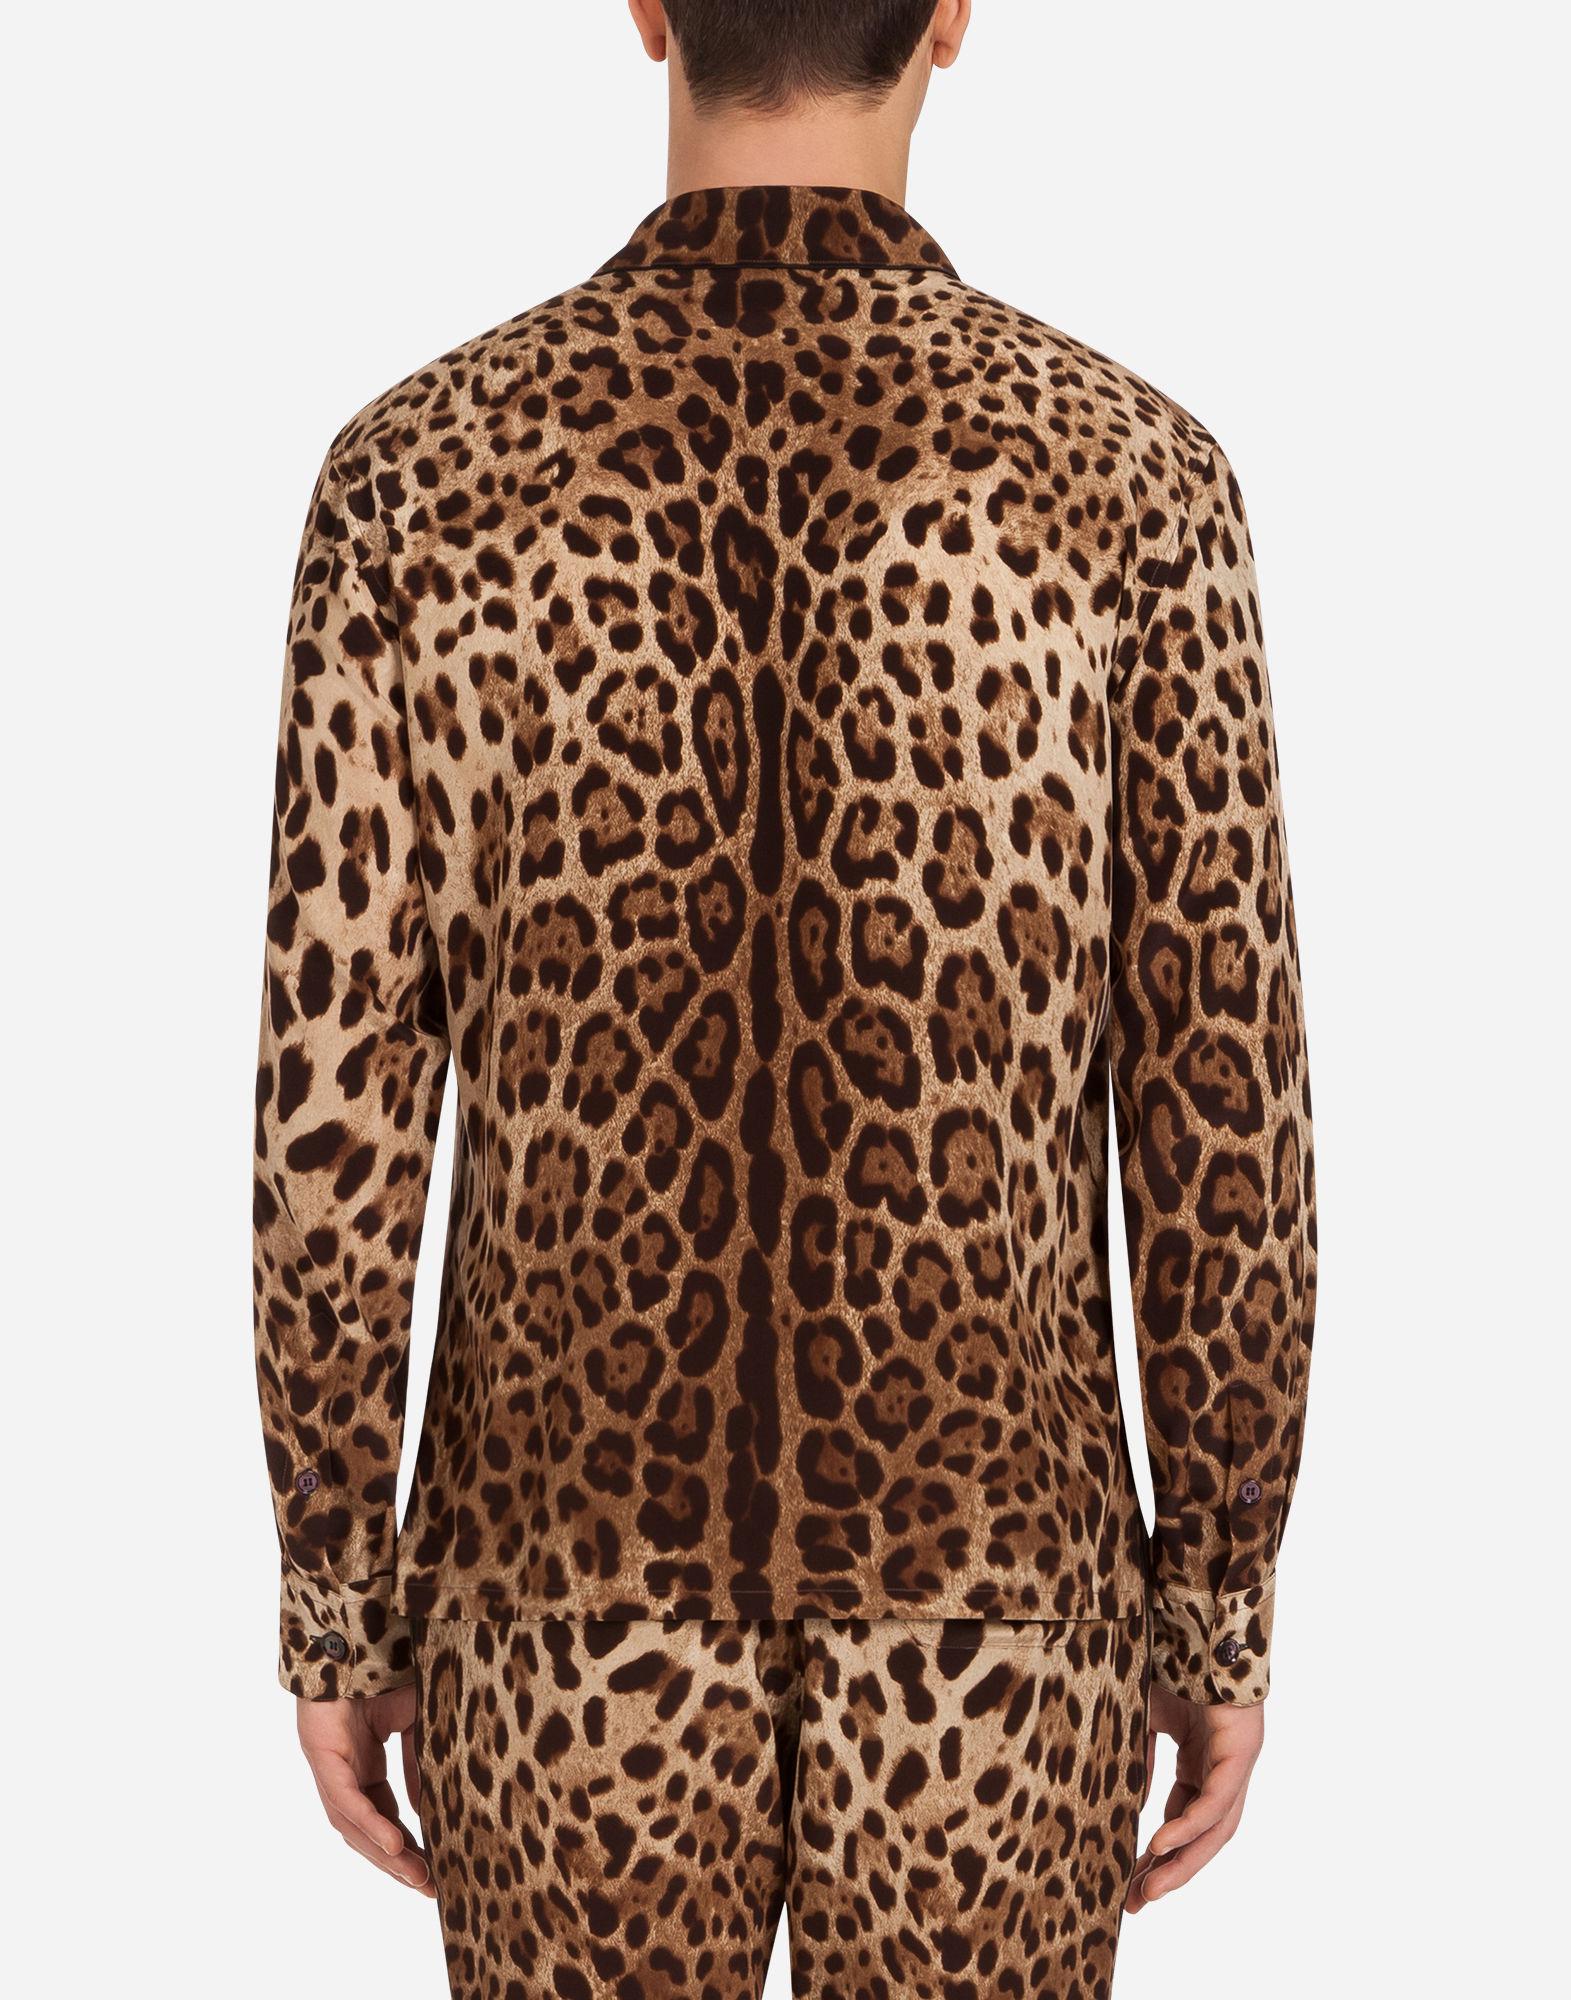 Dolce & Gabbana Leopard Print Silk Pyjama Shirt in Brown for Men - Lyst